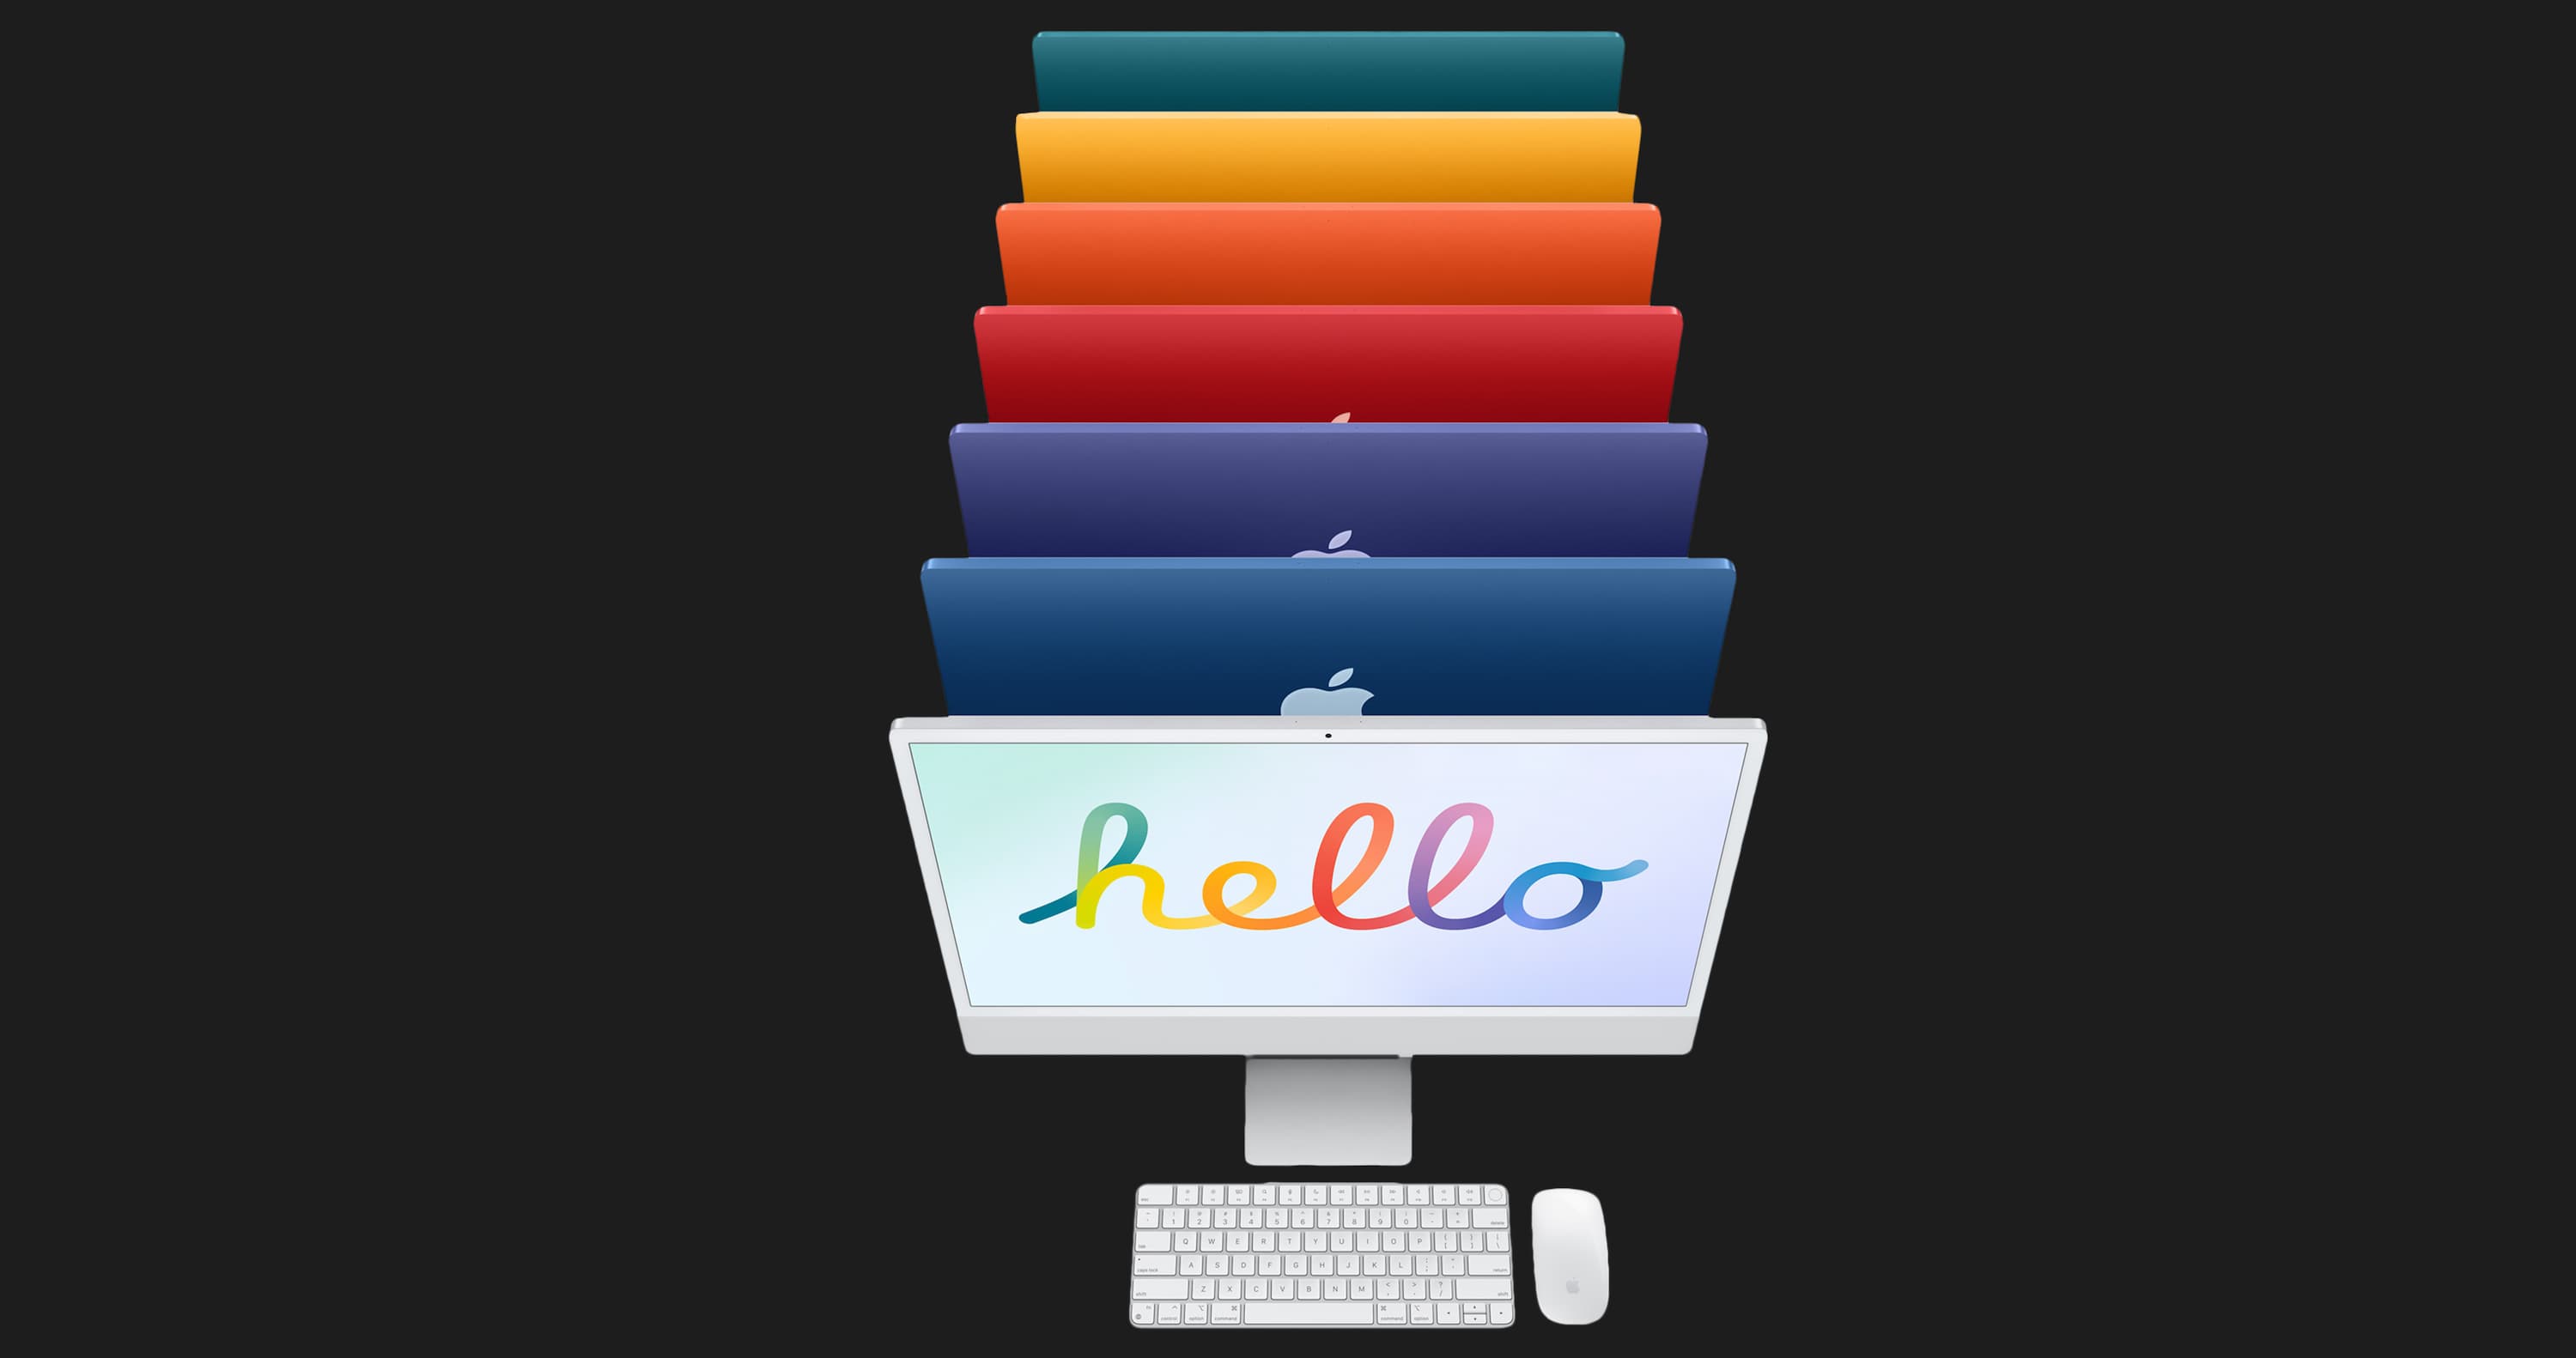 Apple iMac 24 with Retina 4.5K, 256GB, 8 CPU / 8 GPU (Silver) (Z12Q000NR)